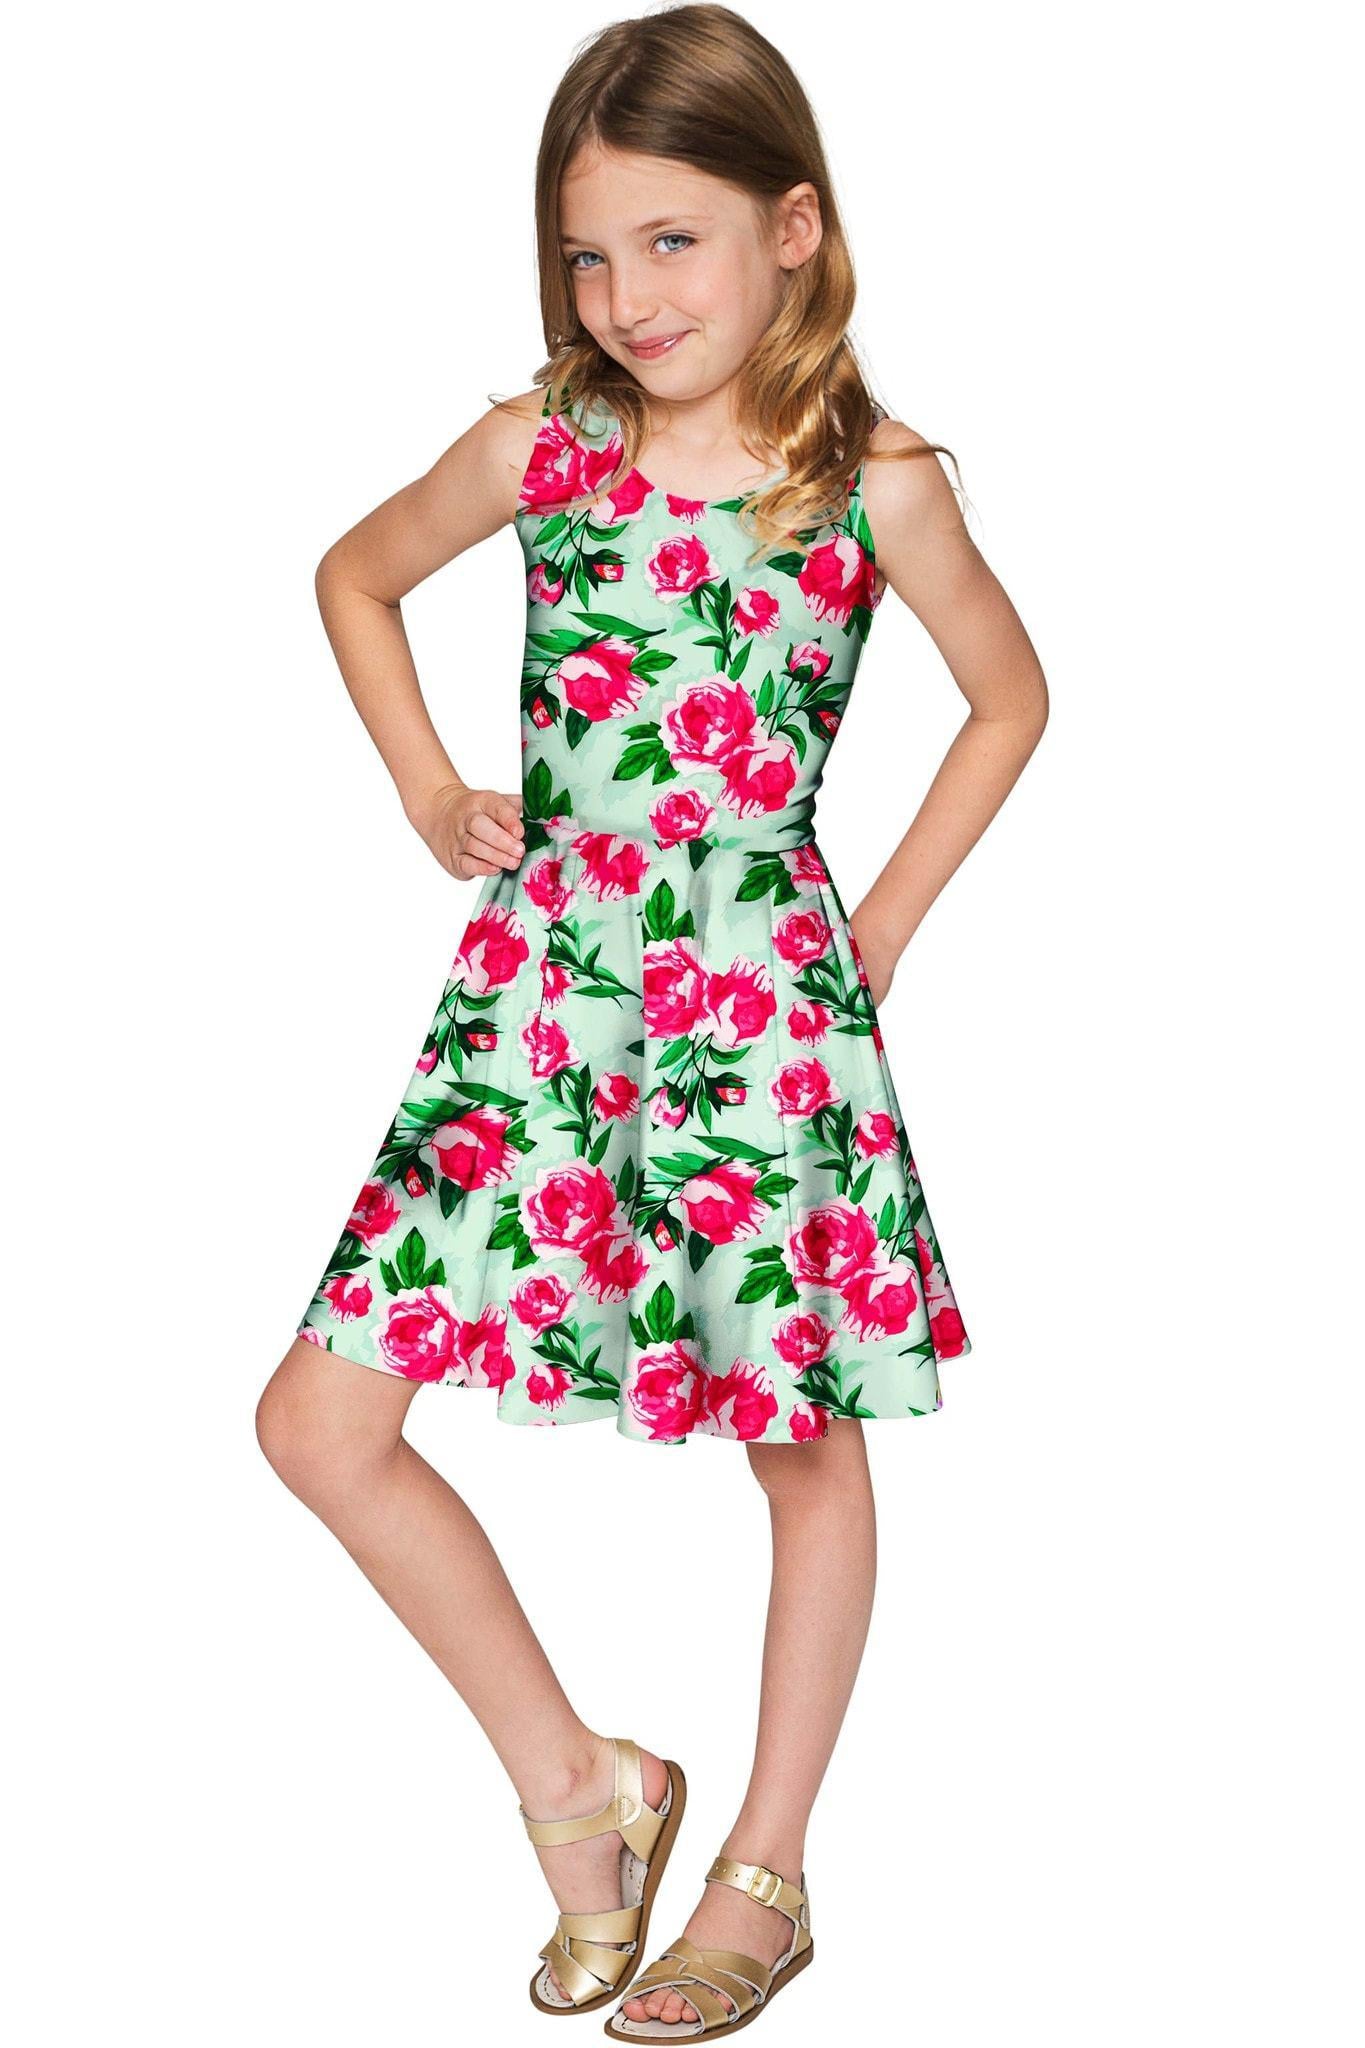 Sweetheart Mia Fit & Flare Green Flower Print Dress - Girls - Pineapple Clothing